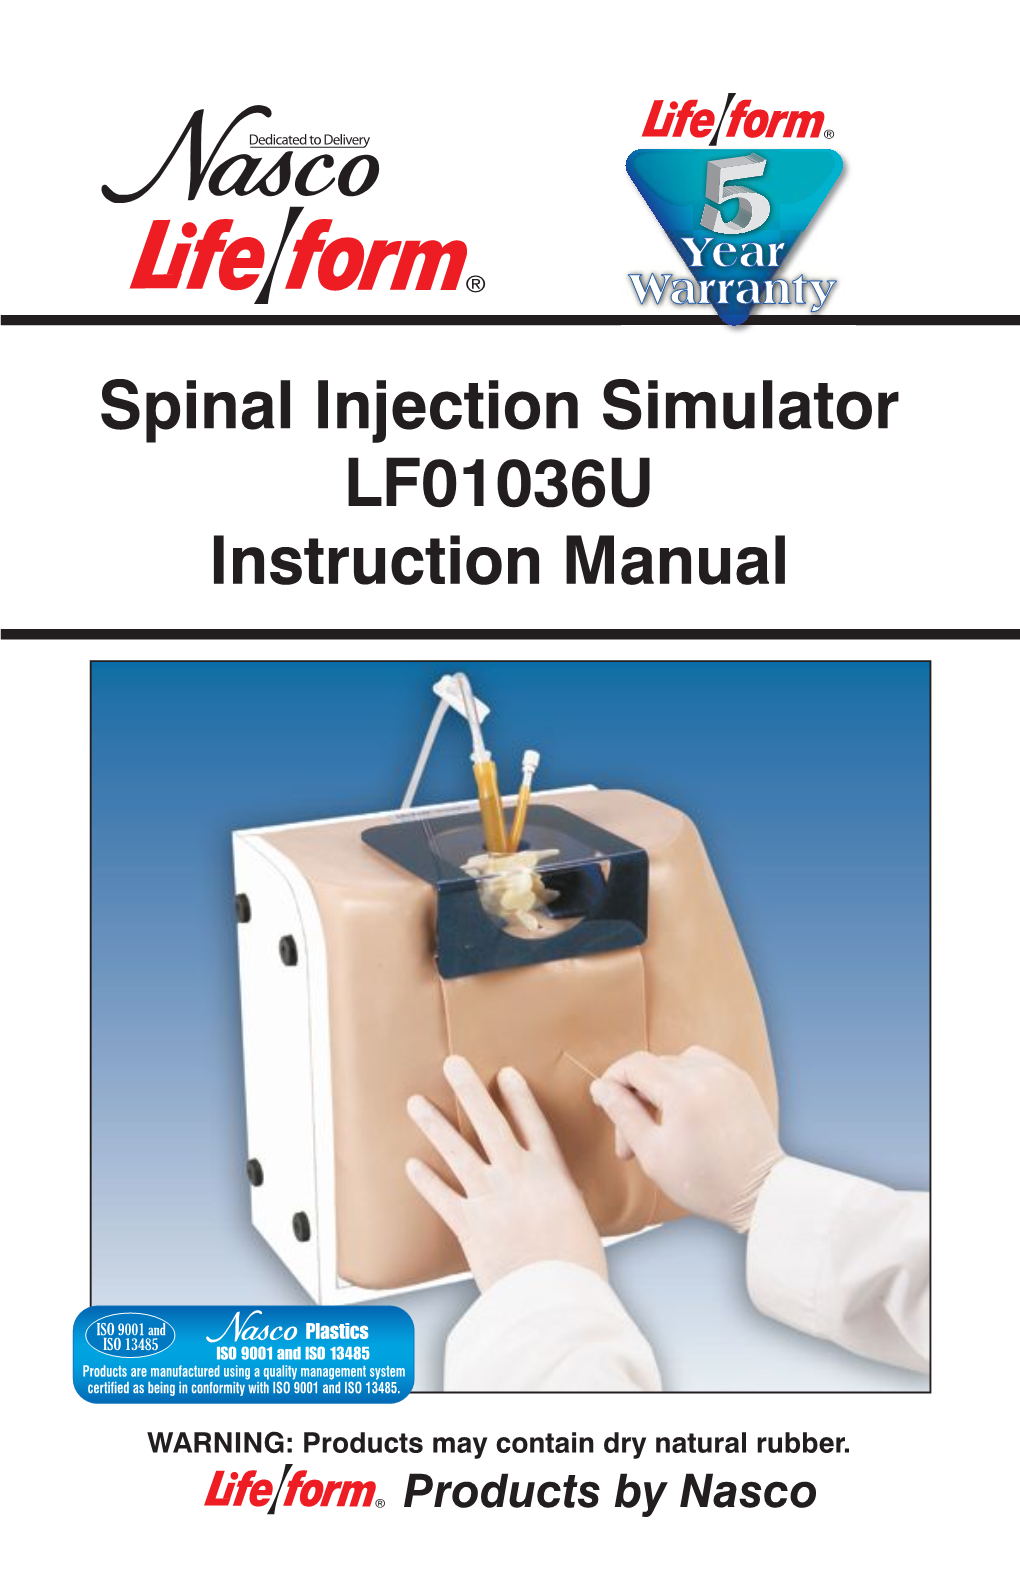 Spinal Injection Simulator LF01036U Instruction Manual